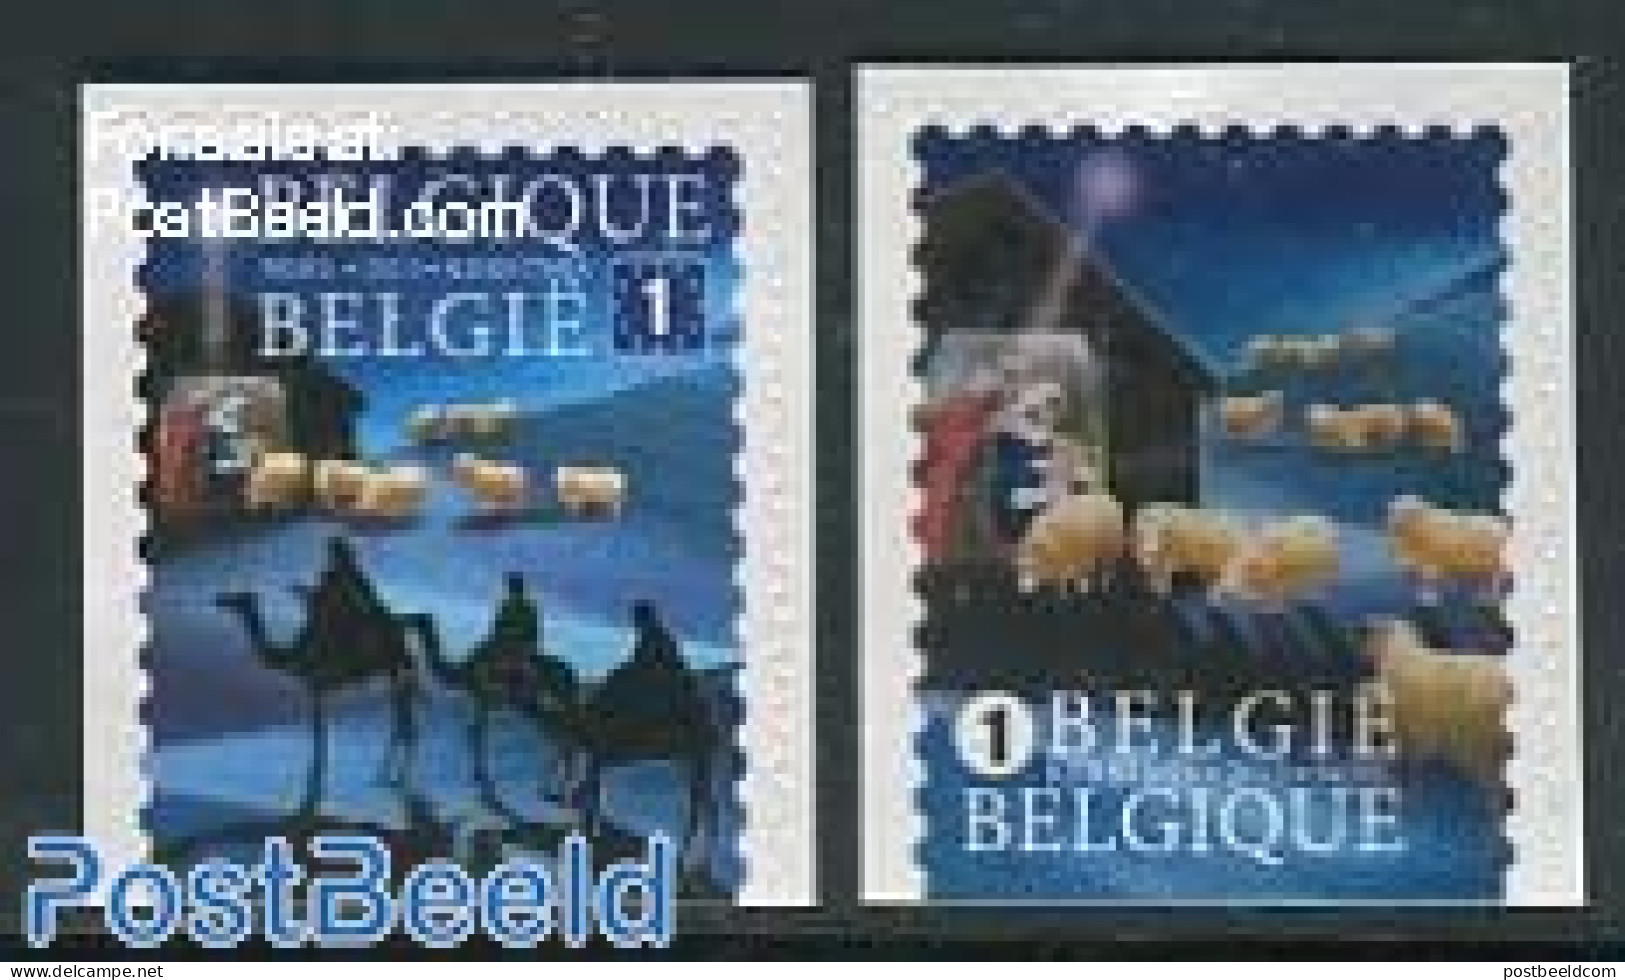 Belgium 2013 Christmas 2v S-a, Mint NH, Nature - Religion - Camels - Christmas - Neufs